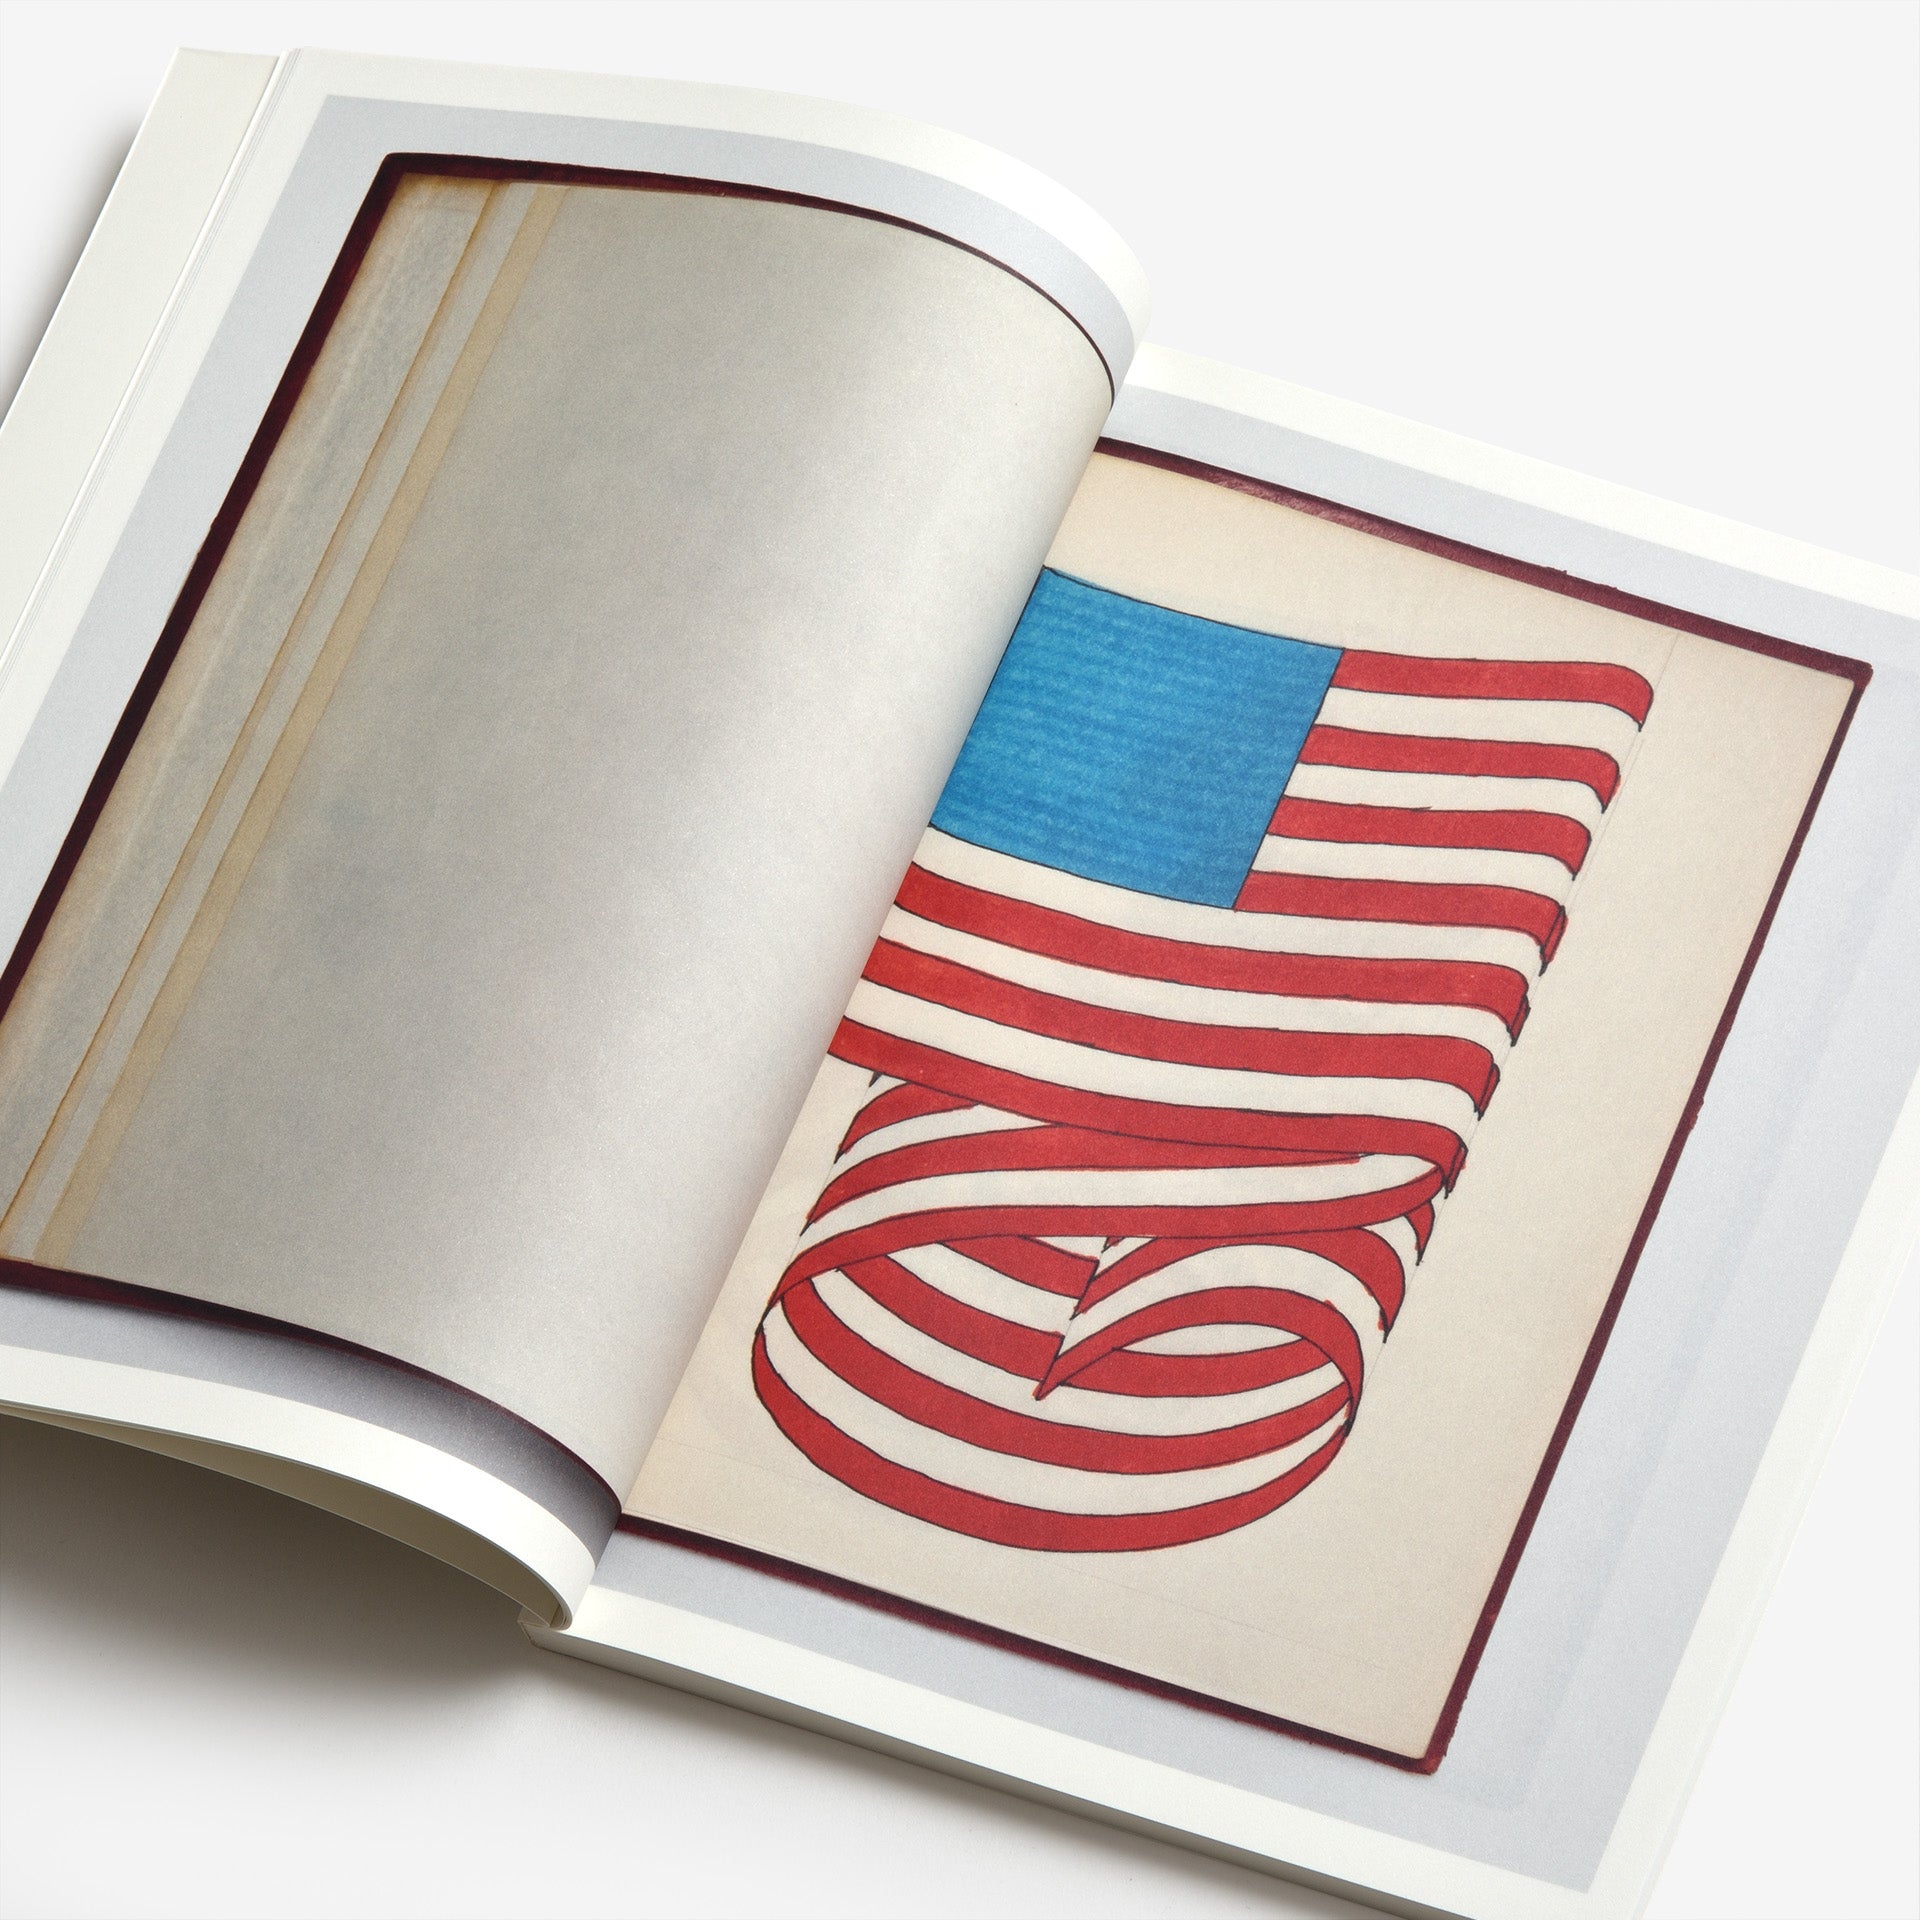 Lance Wyman: Process. A proposal for the 1976 USA Bicentennial identity